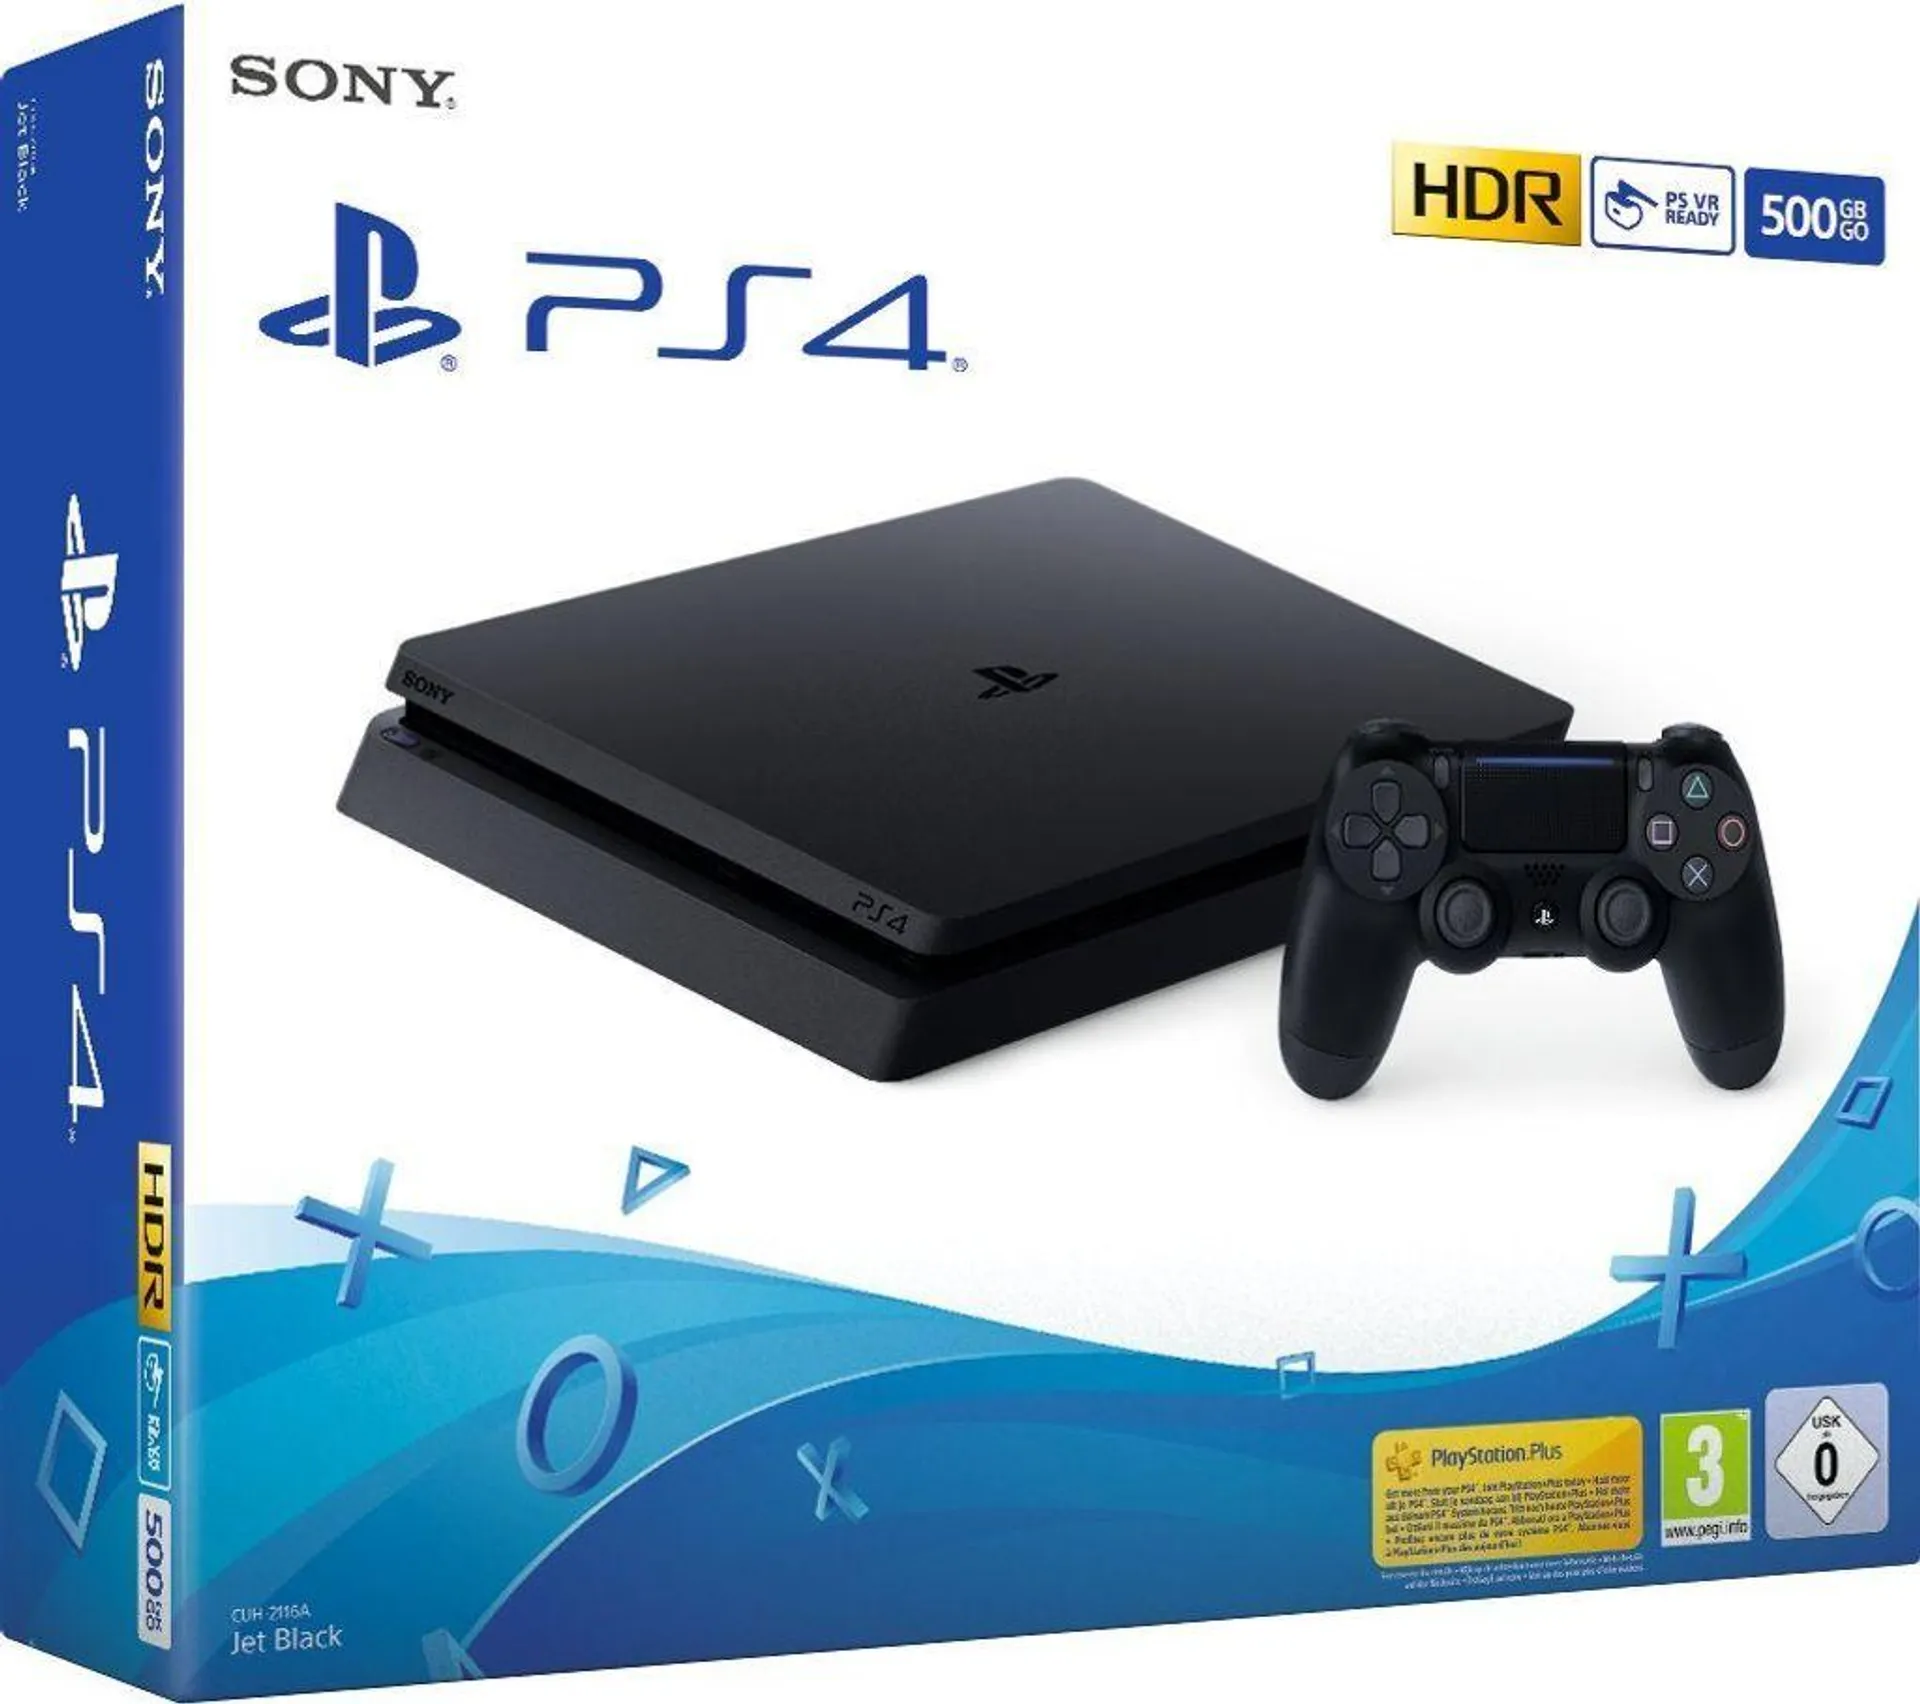 Sony Playstation 4 slim 500 GB schwarz